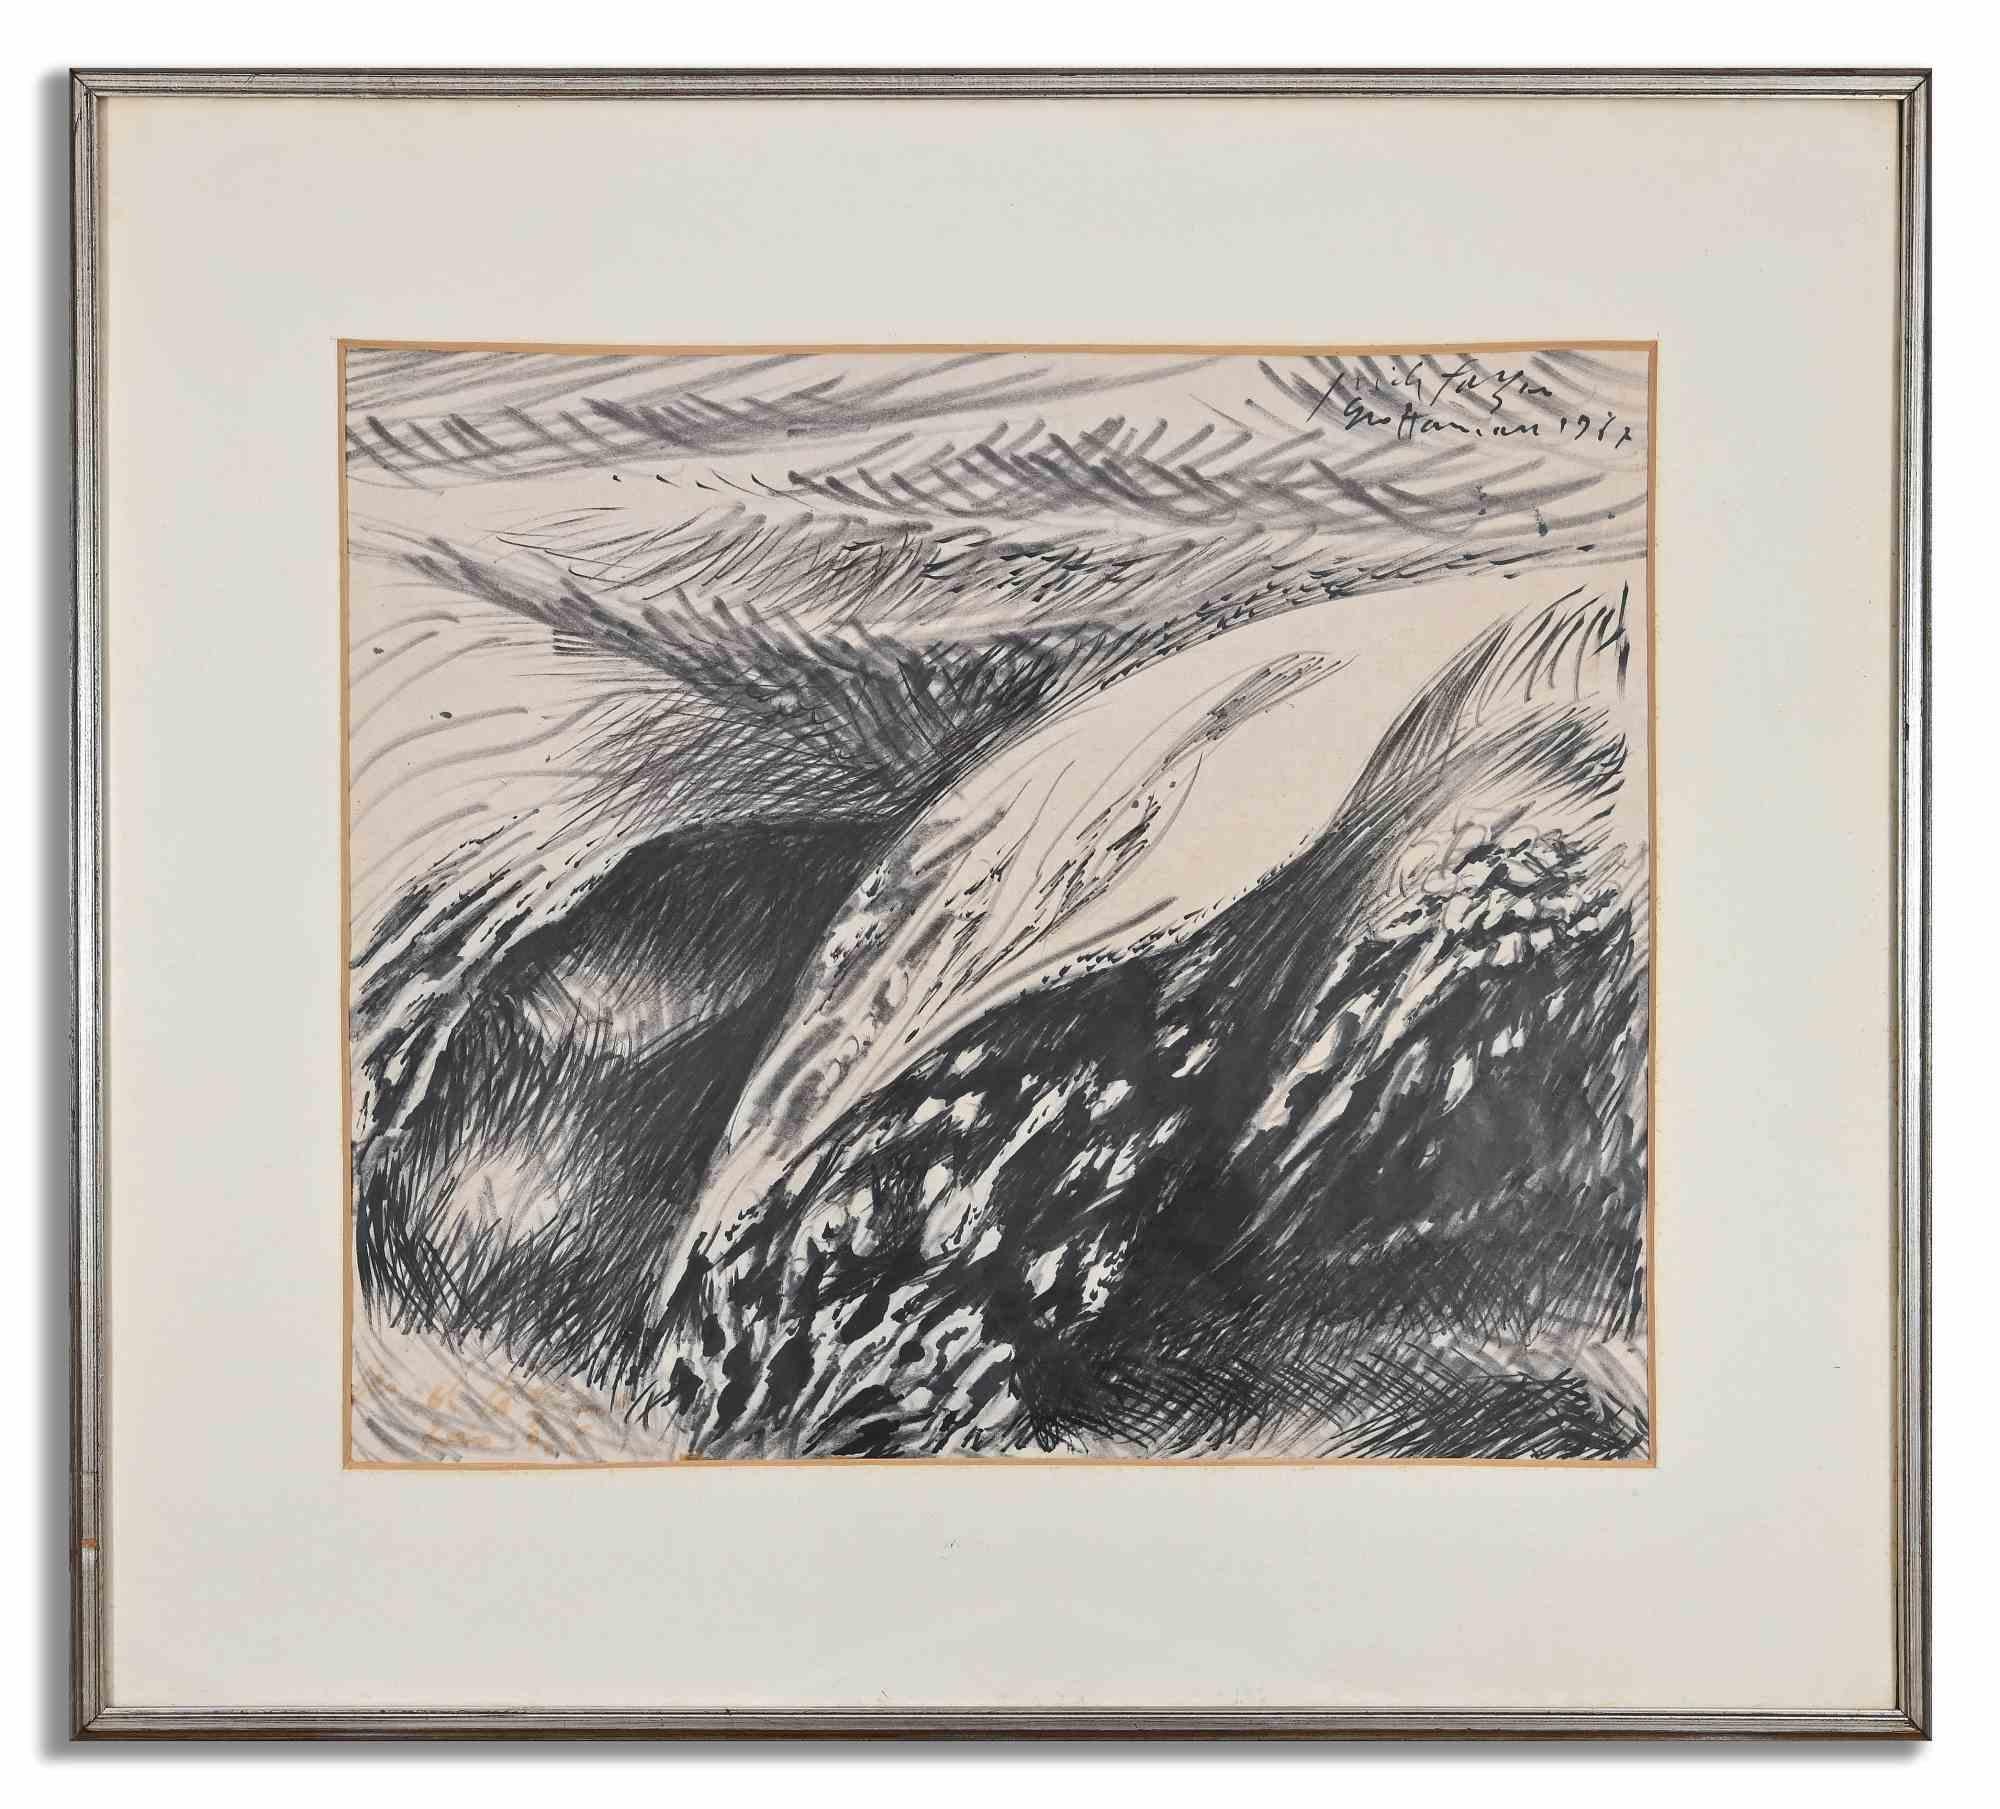 Field noir et blanc -  Drawing de Pericle Fazzini - 1977